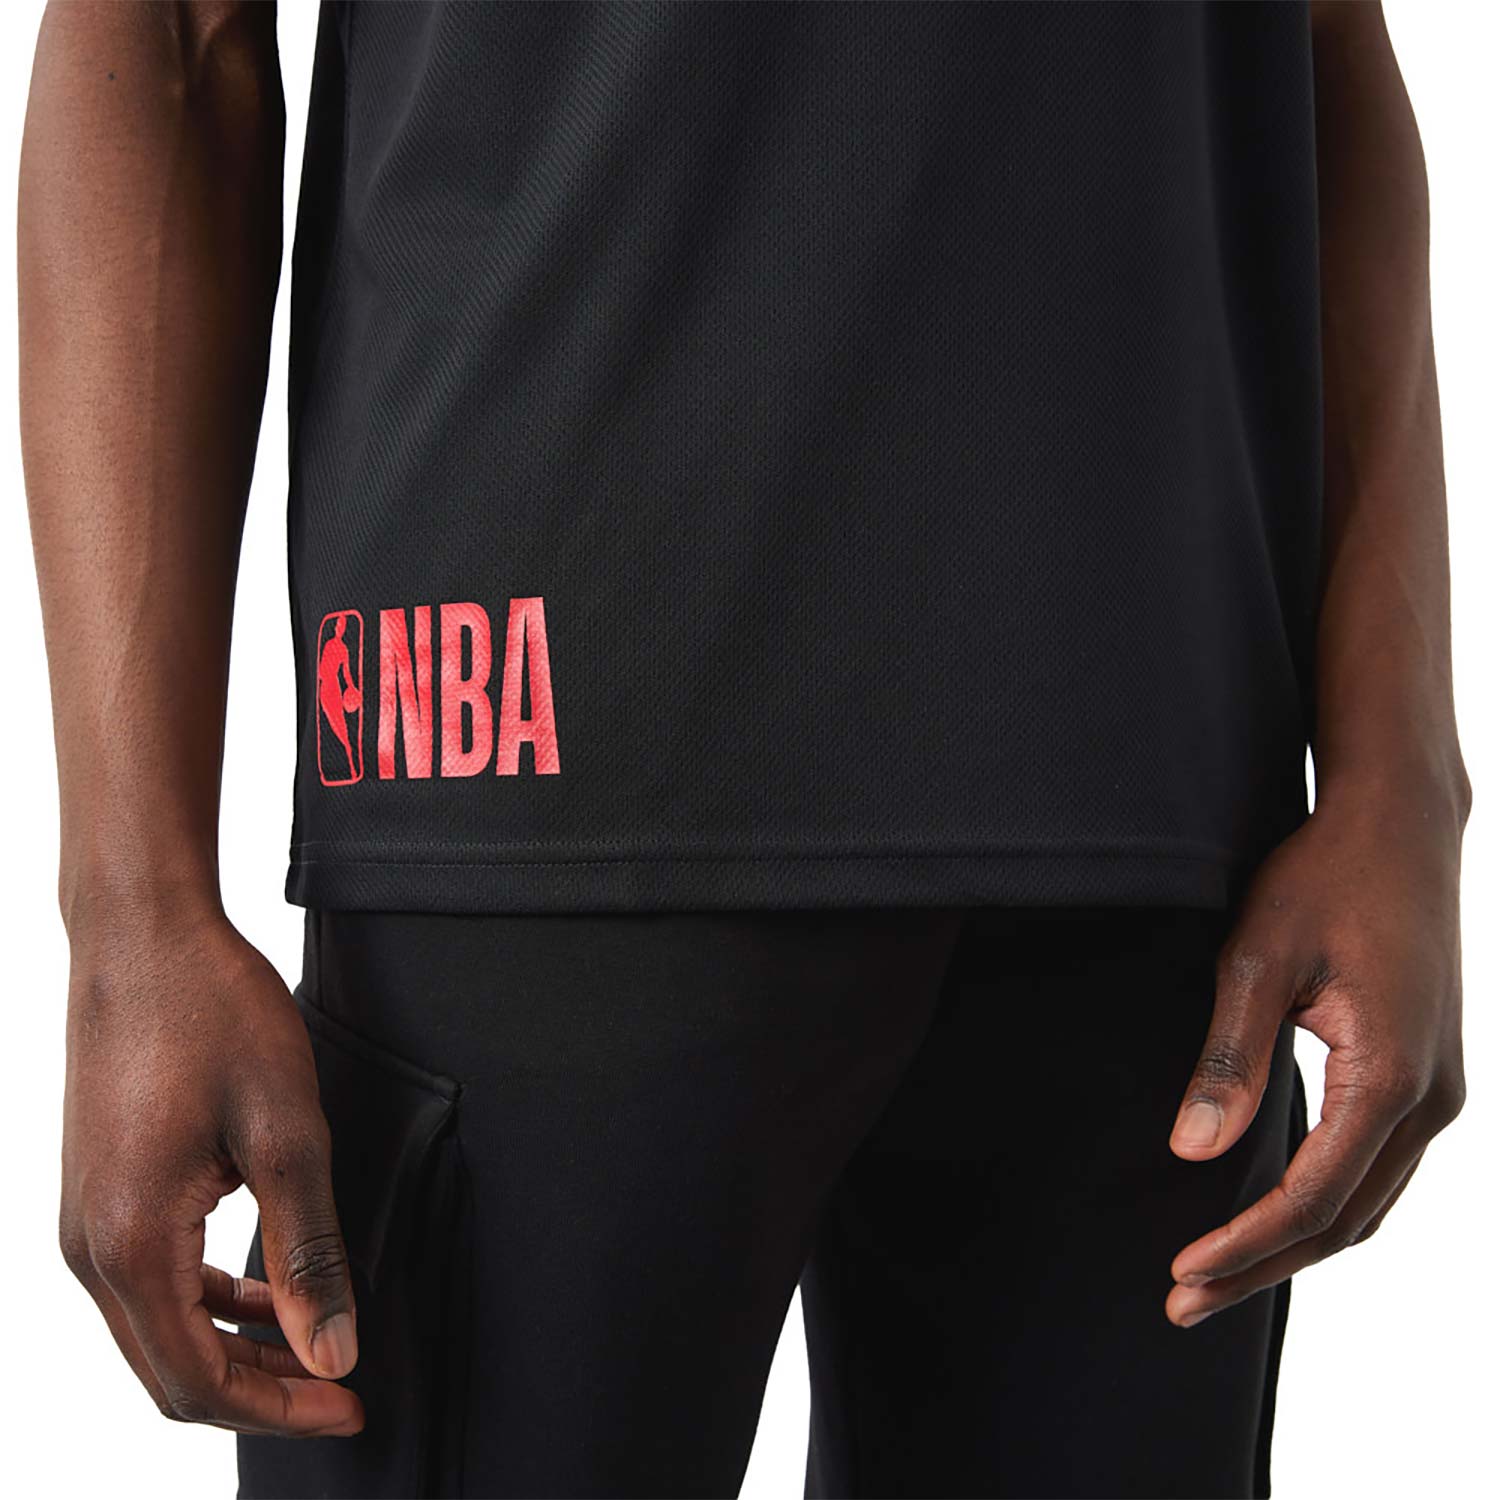 Chicago Bulls NBA Team Logo Black T-Shirt